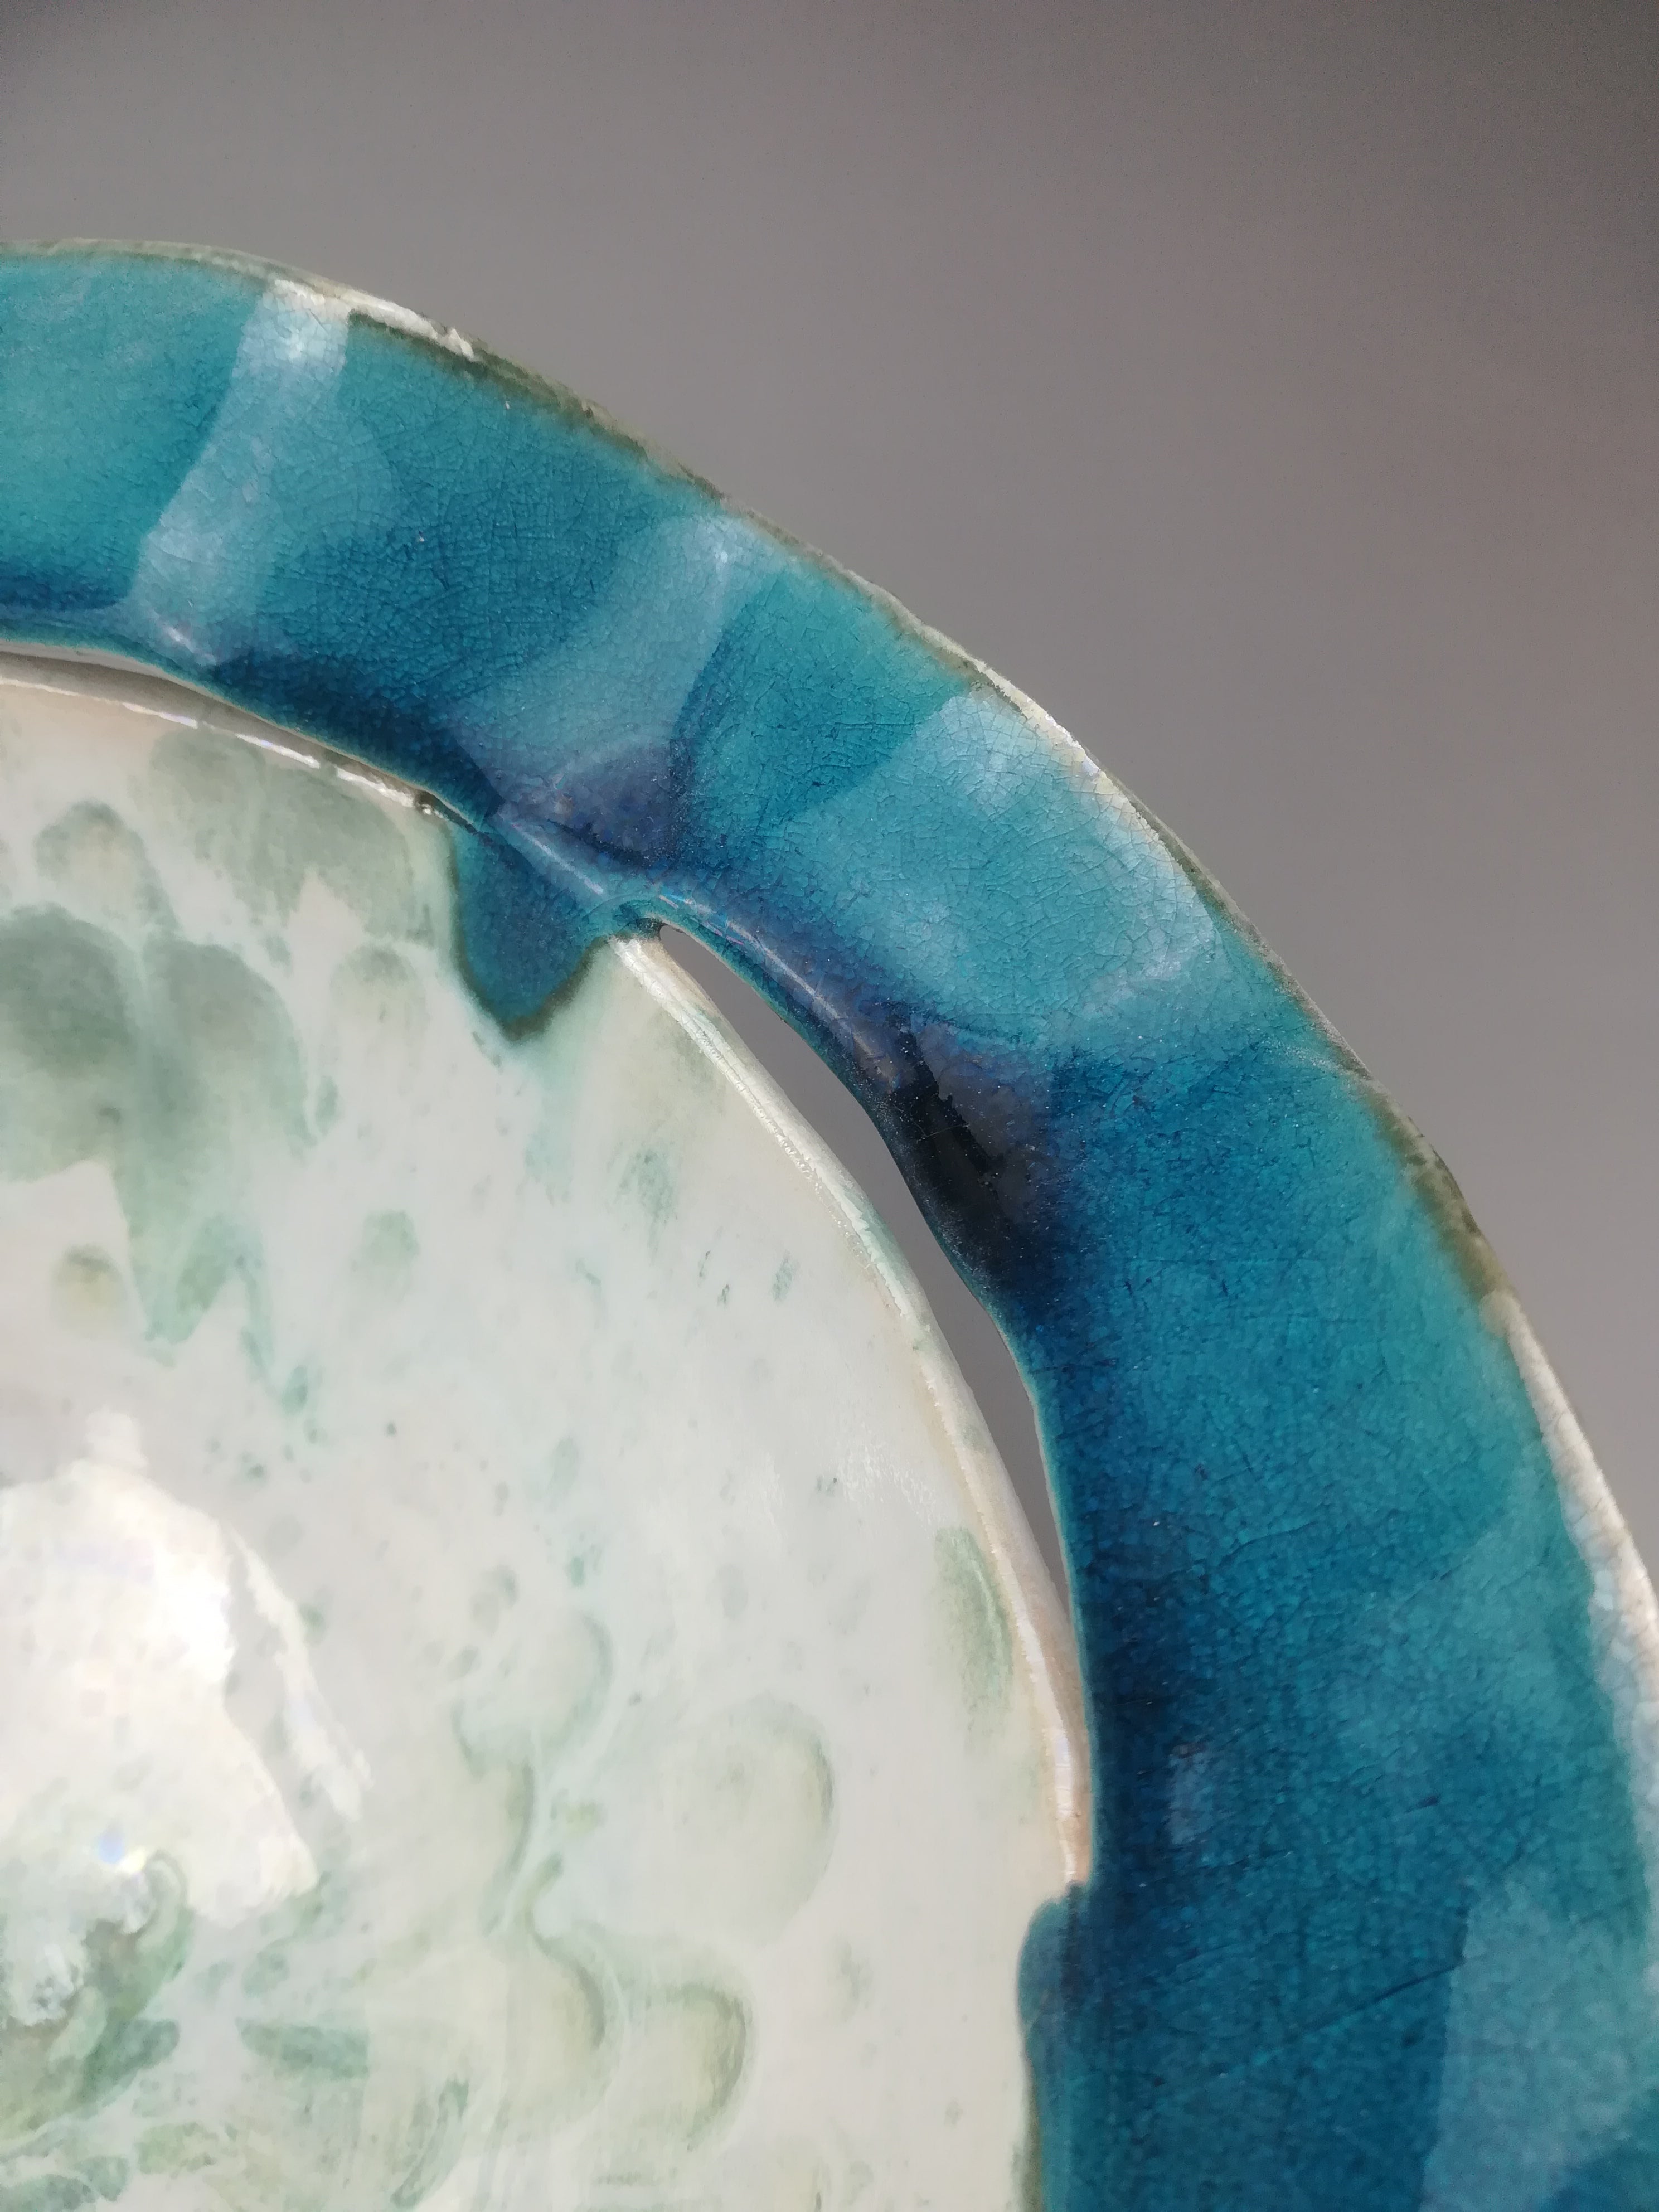 Wave Bowl- Cumulus Teal Rim Glaze (White/Green Speckled)